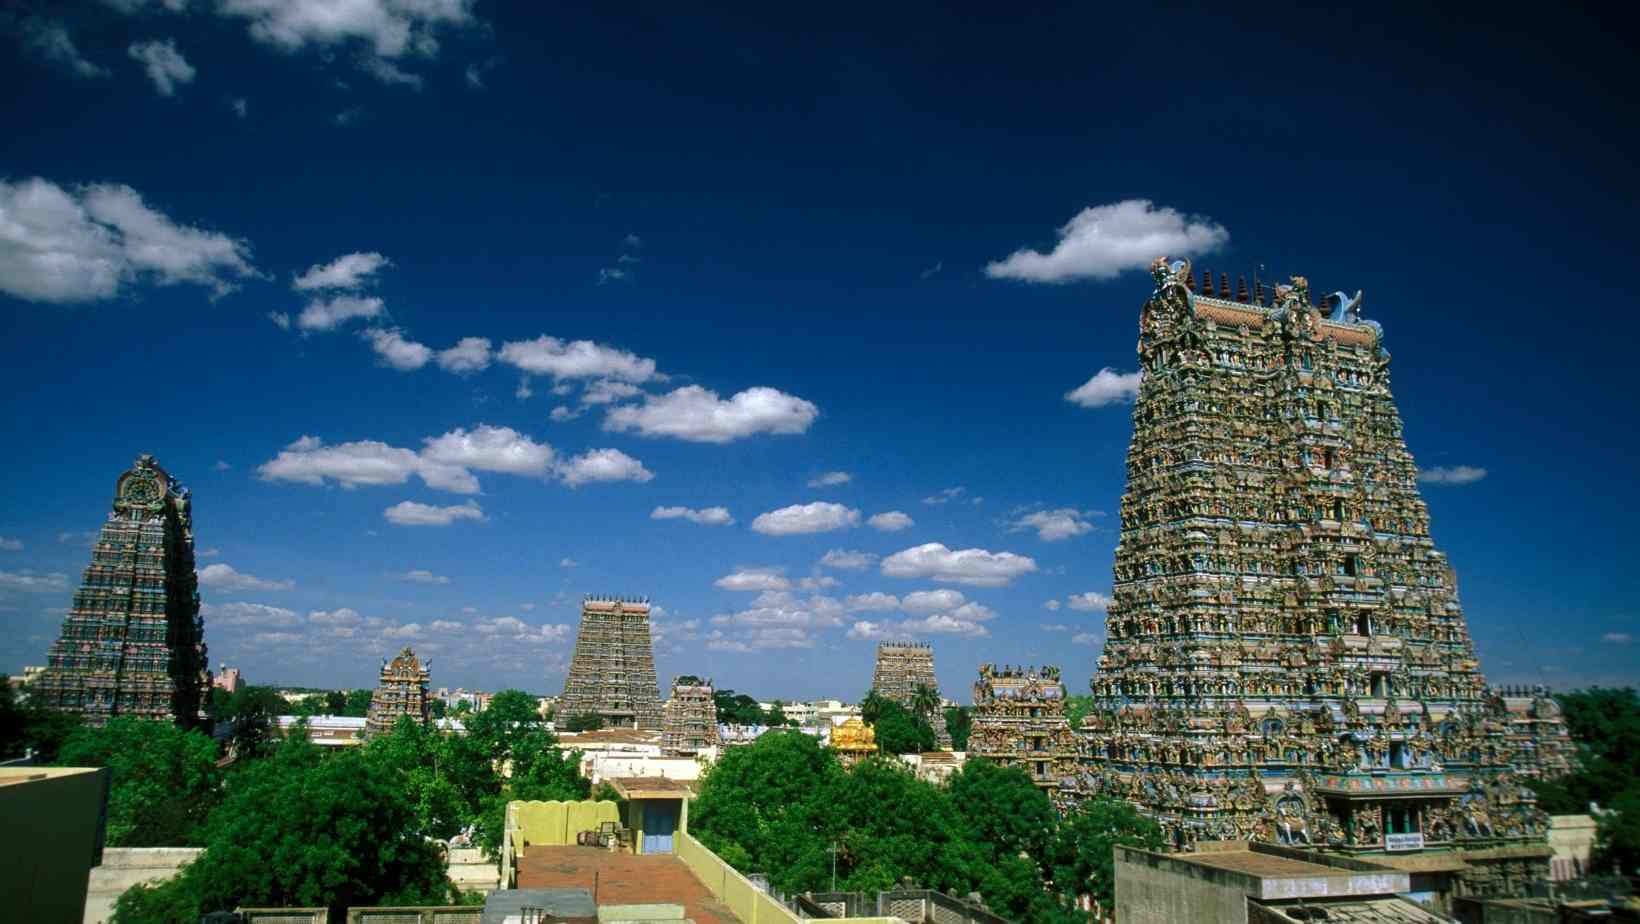 Places To Visit In Madurai